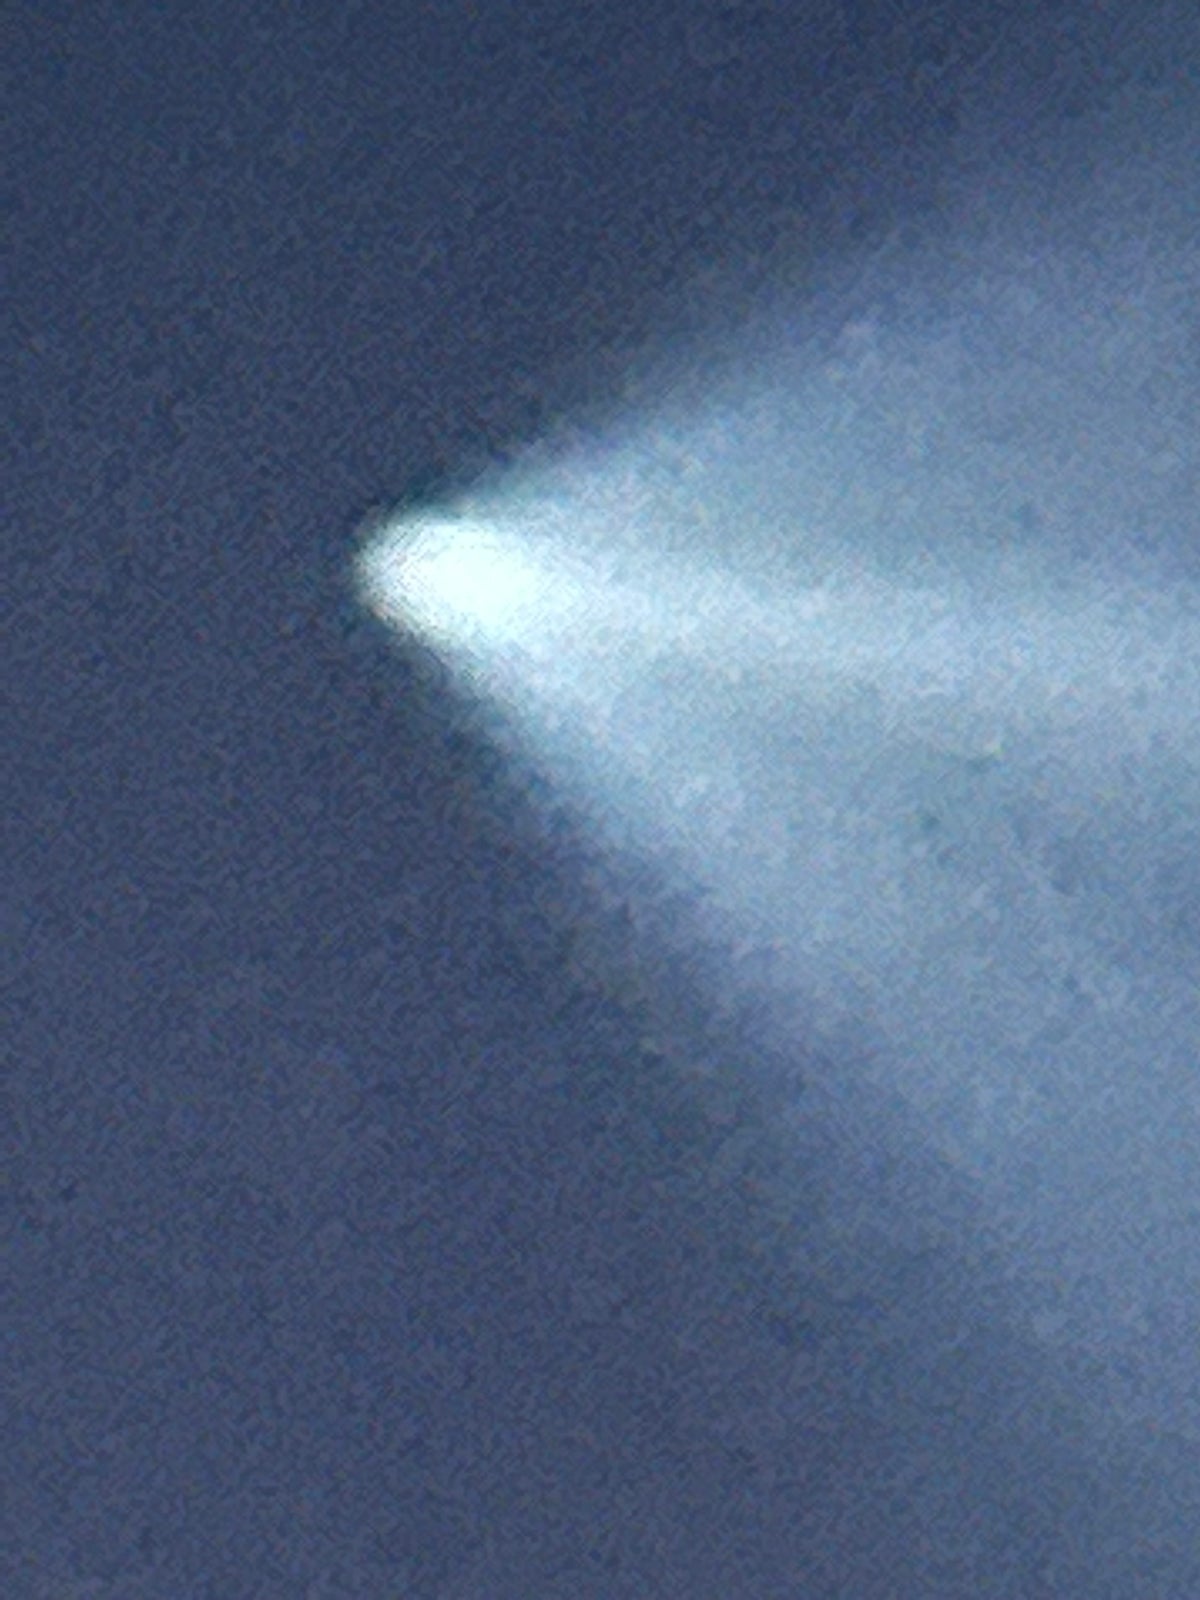 Space X Falcon 9 rocket's vapor trail seen over Marlboro. Photo courtesy of News 12 New Jersey viewer Virginia Klein.